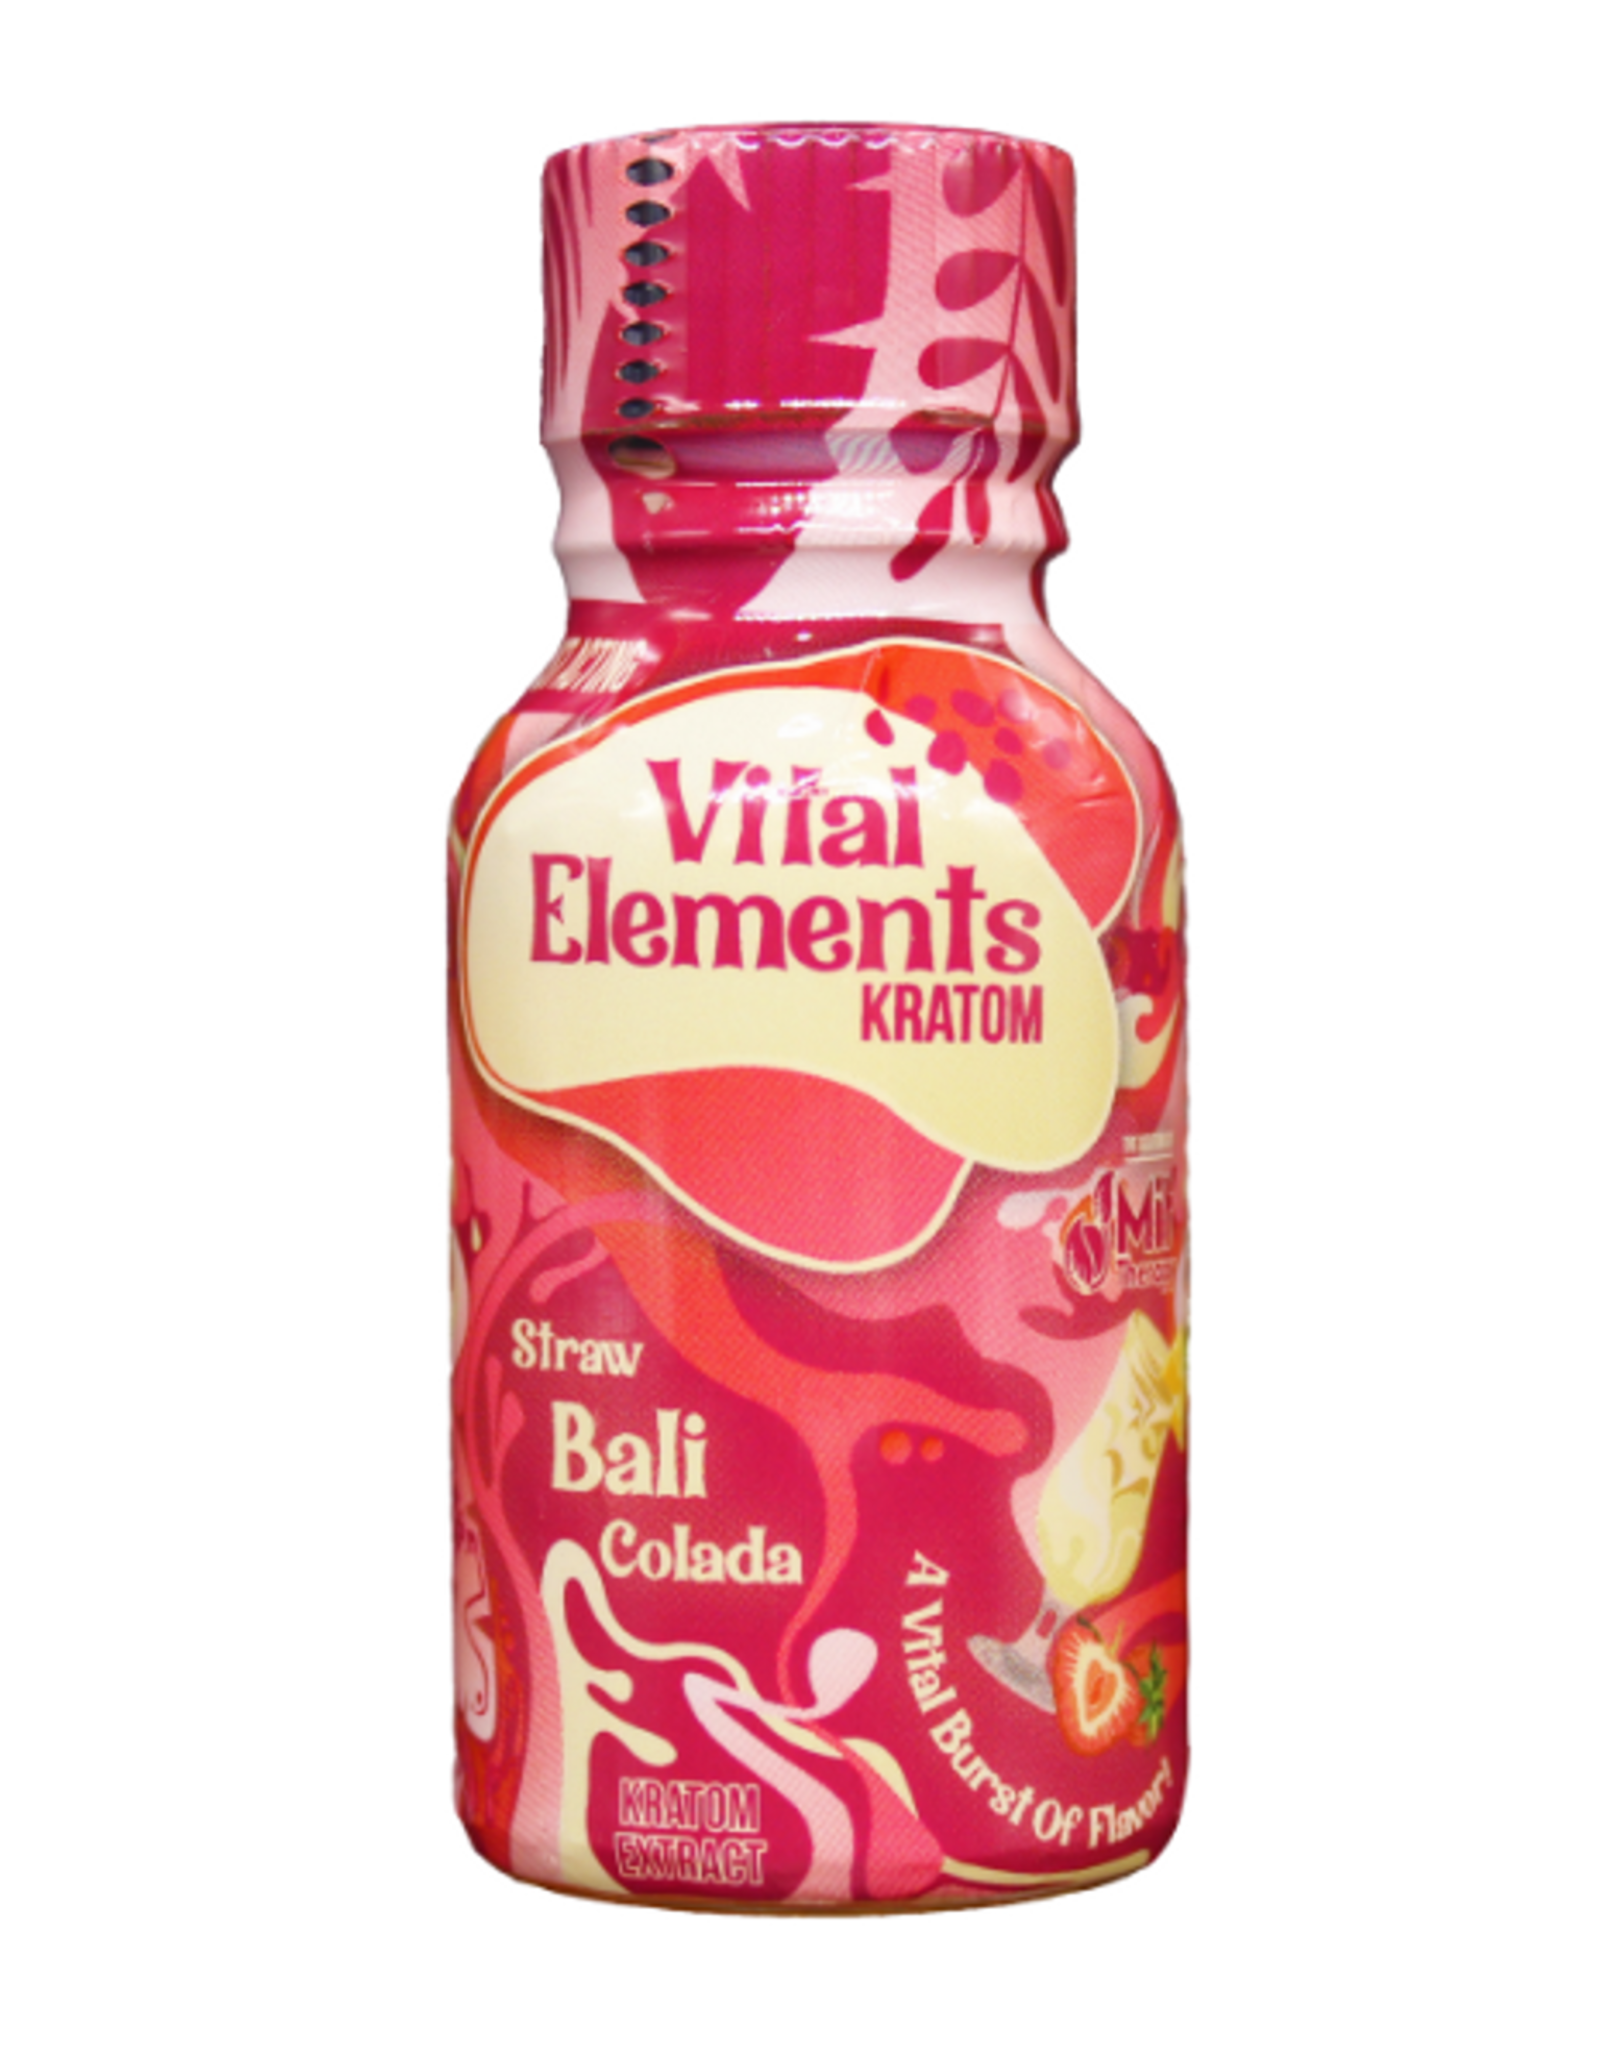 Vital Elements Vital Elements Shot Straw Bali Colada 12ct Box